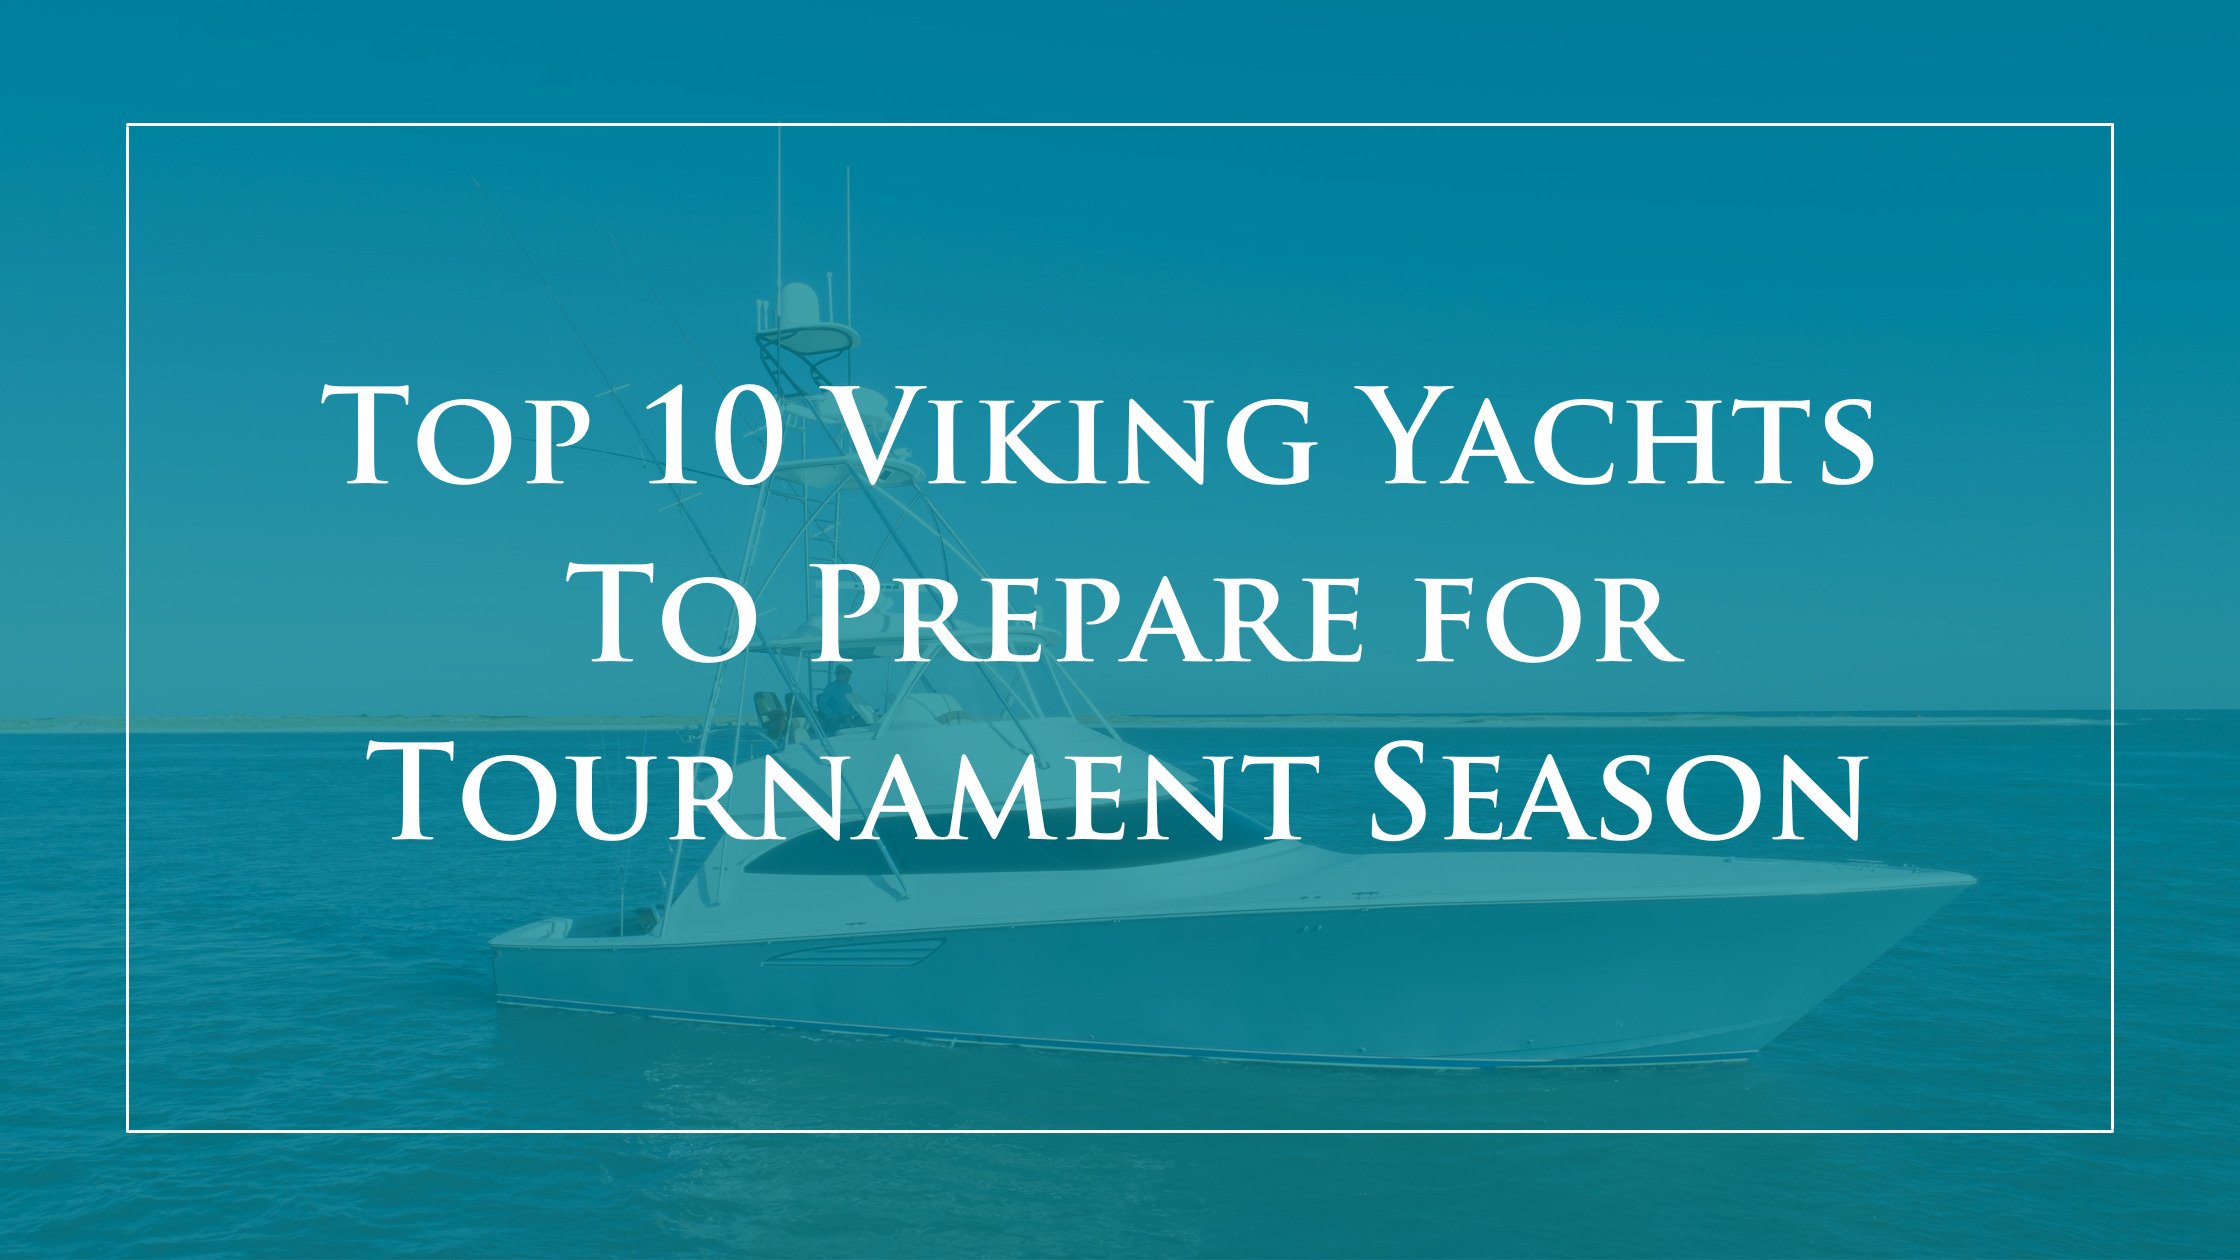 HMY’s Top 10 Viking Sportfishing Yachts to Prepare for Tournament Season